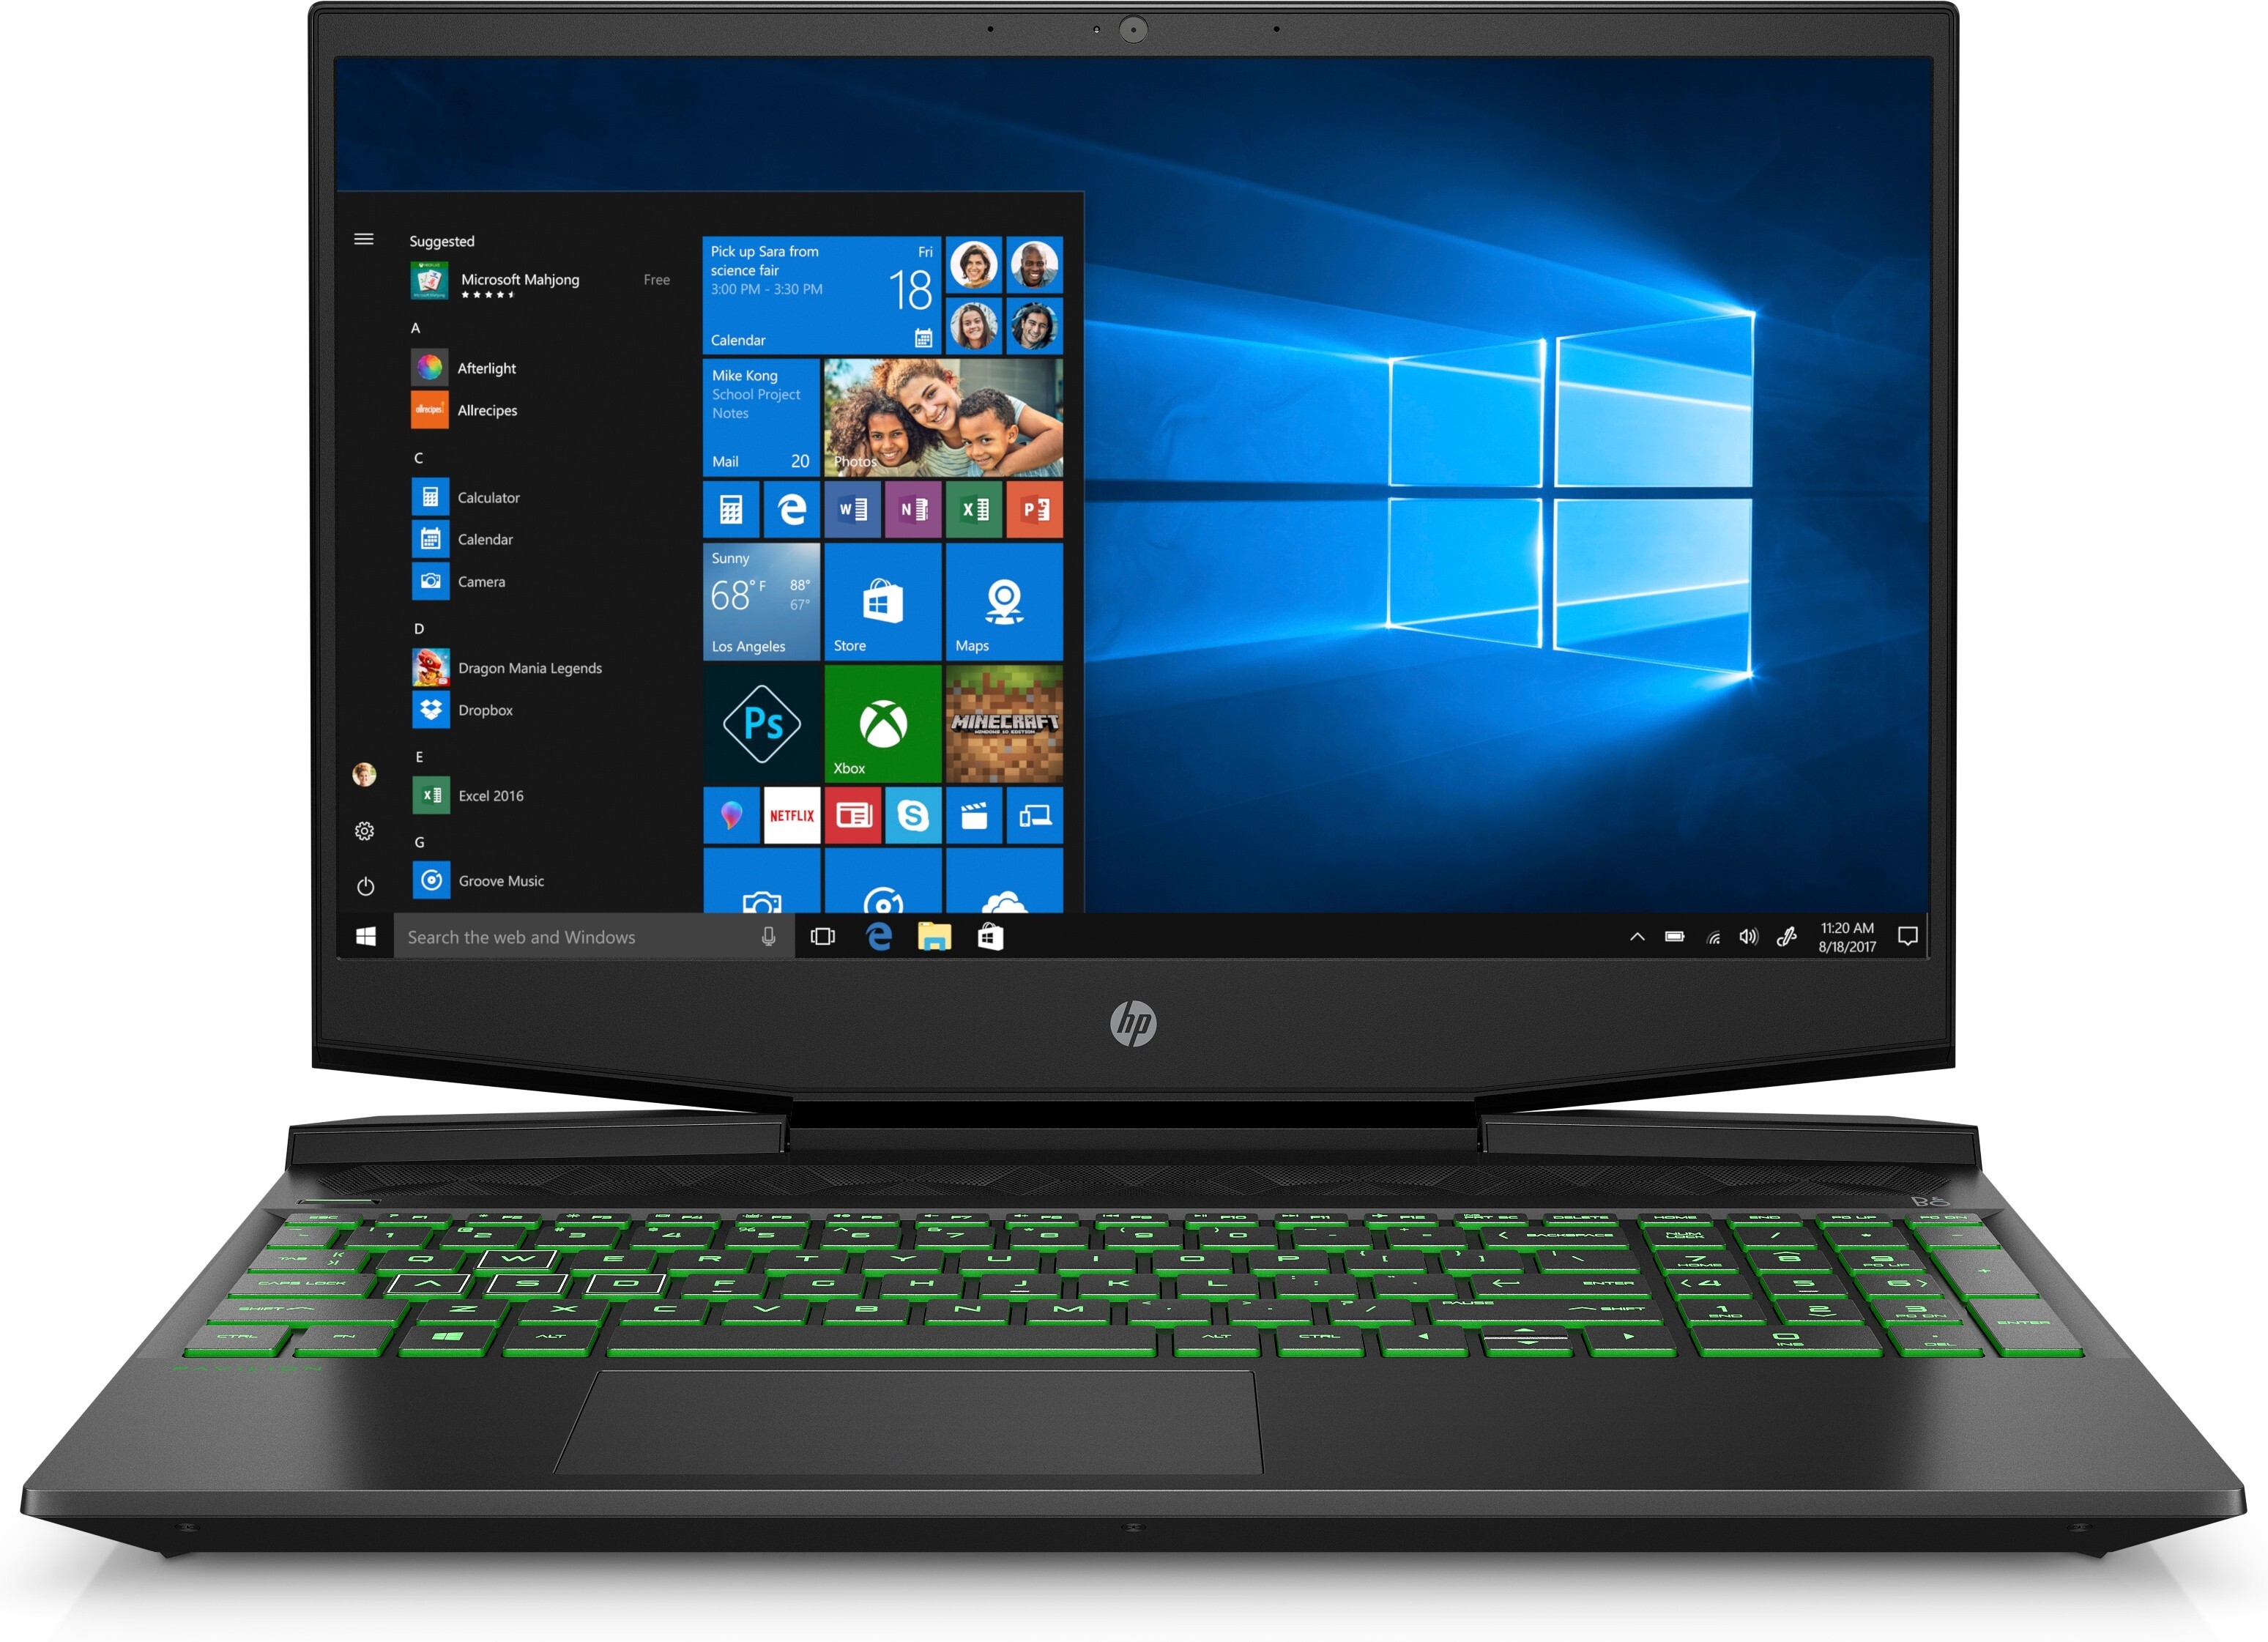 Laptop HP Pavilion Gaming 15-dk0000TX 7HR10PA - Intel Core i5-9300H, 8GB RAM, SSD 256GB, Nvidia GeForce GTX 1650 4GB GDDR5, 15.6 inch